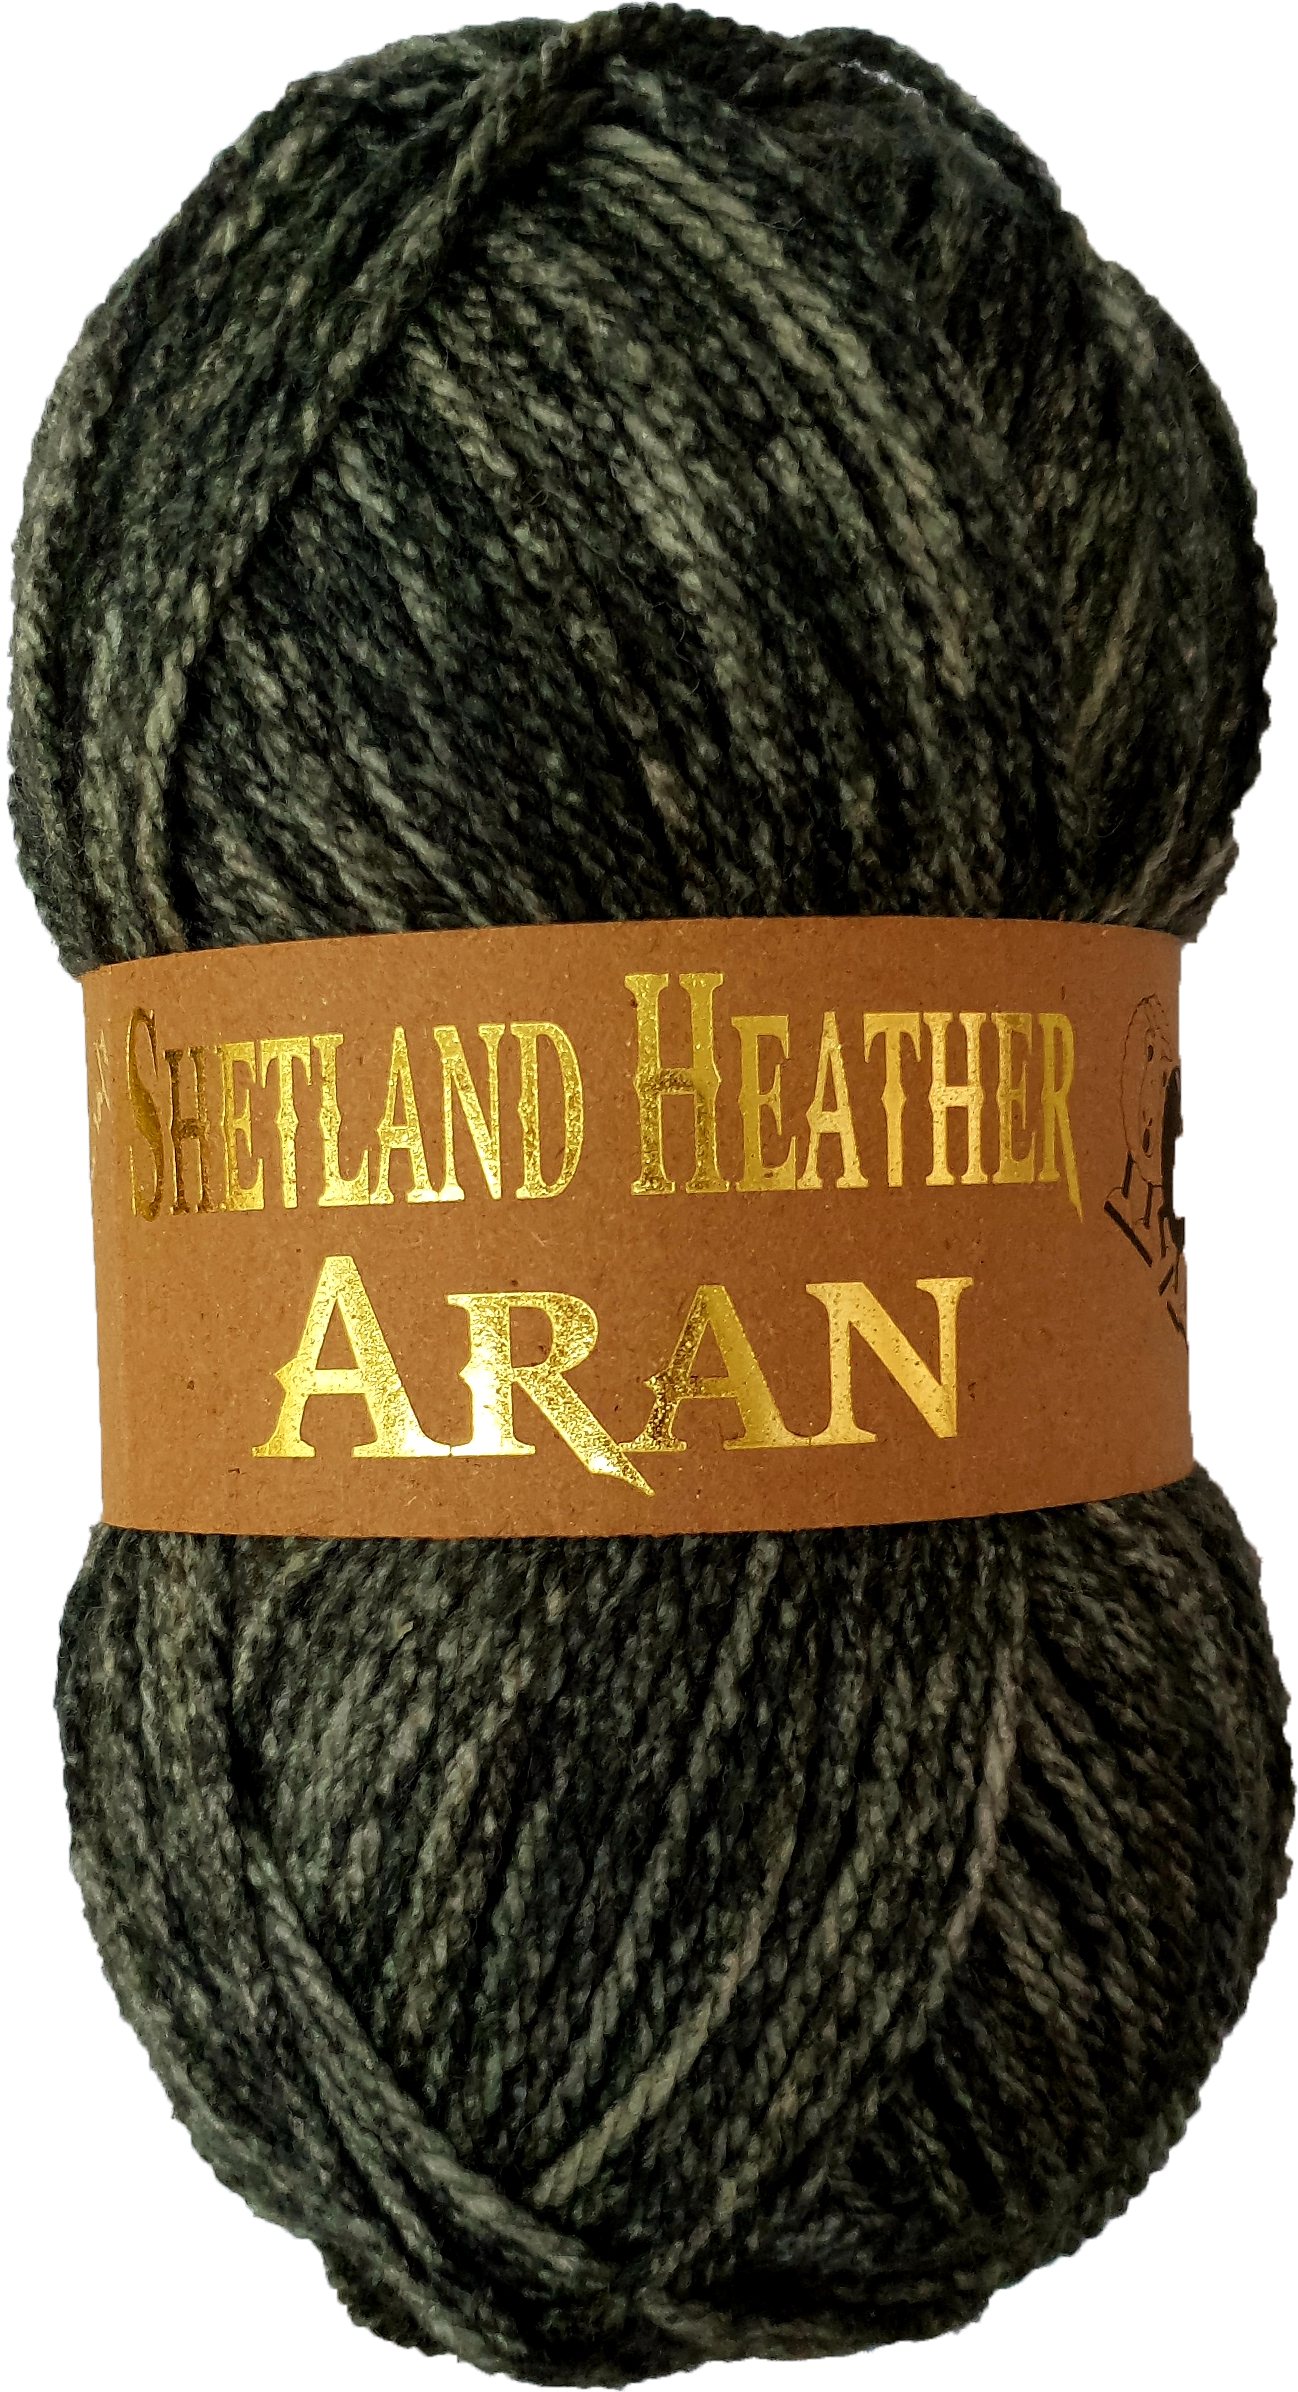 Shetland Heather Aran 100g Twilight